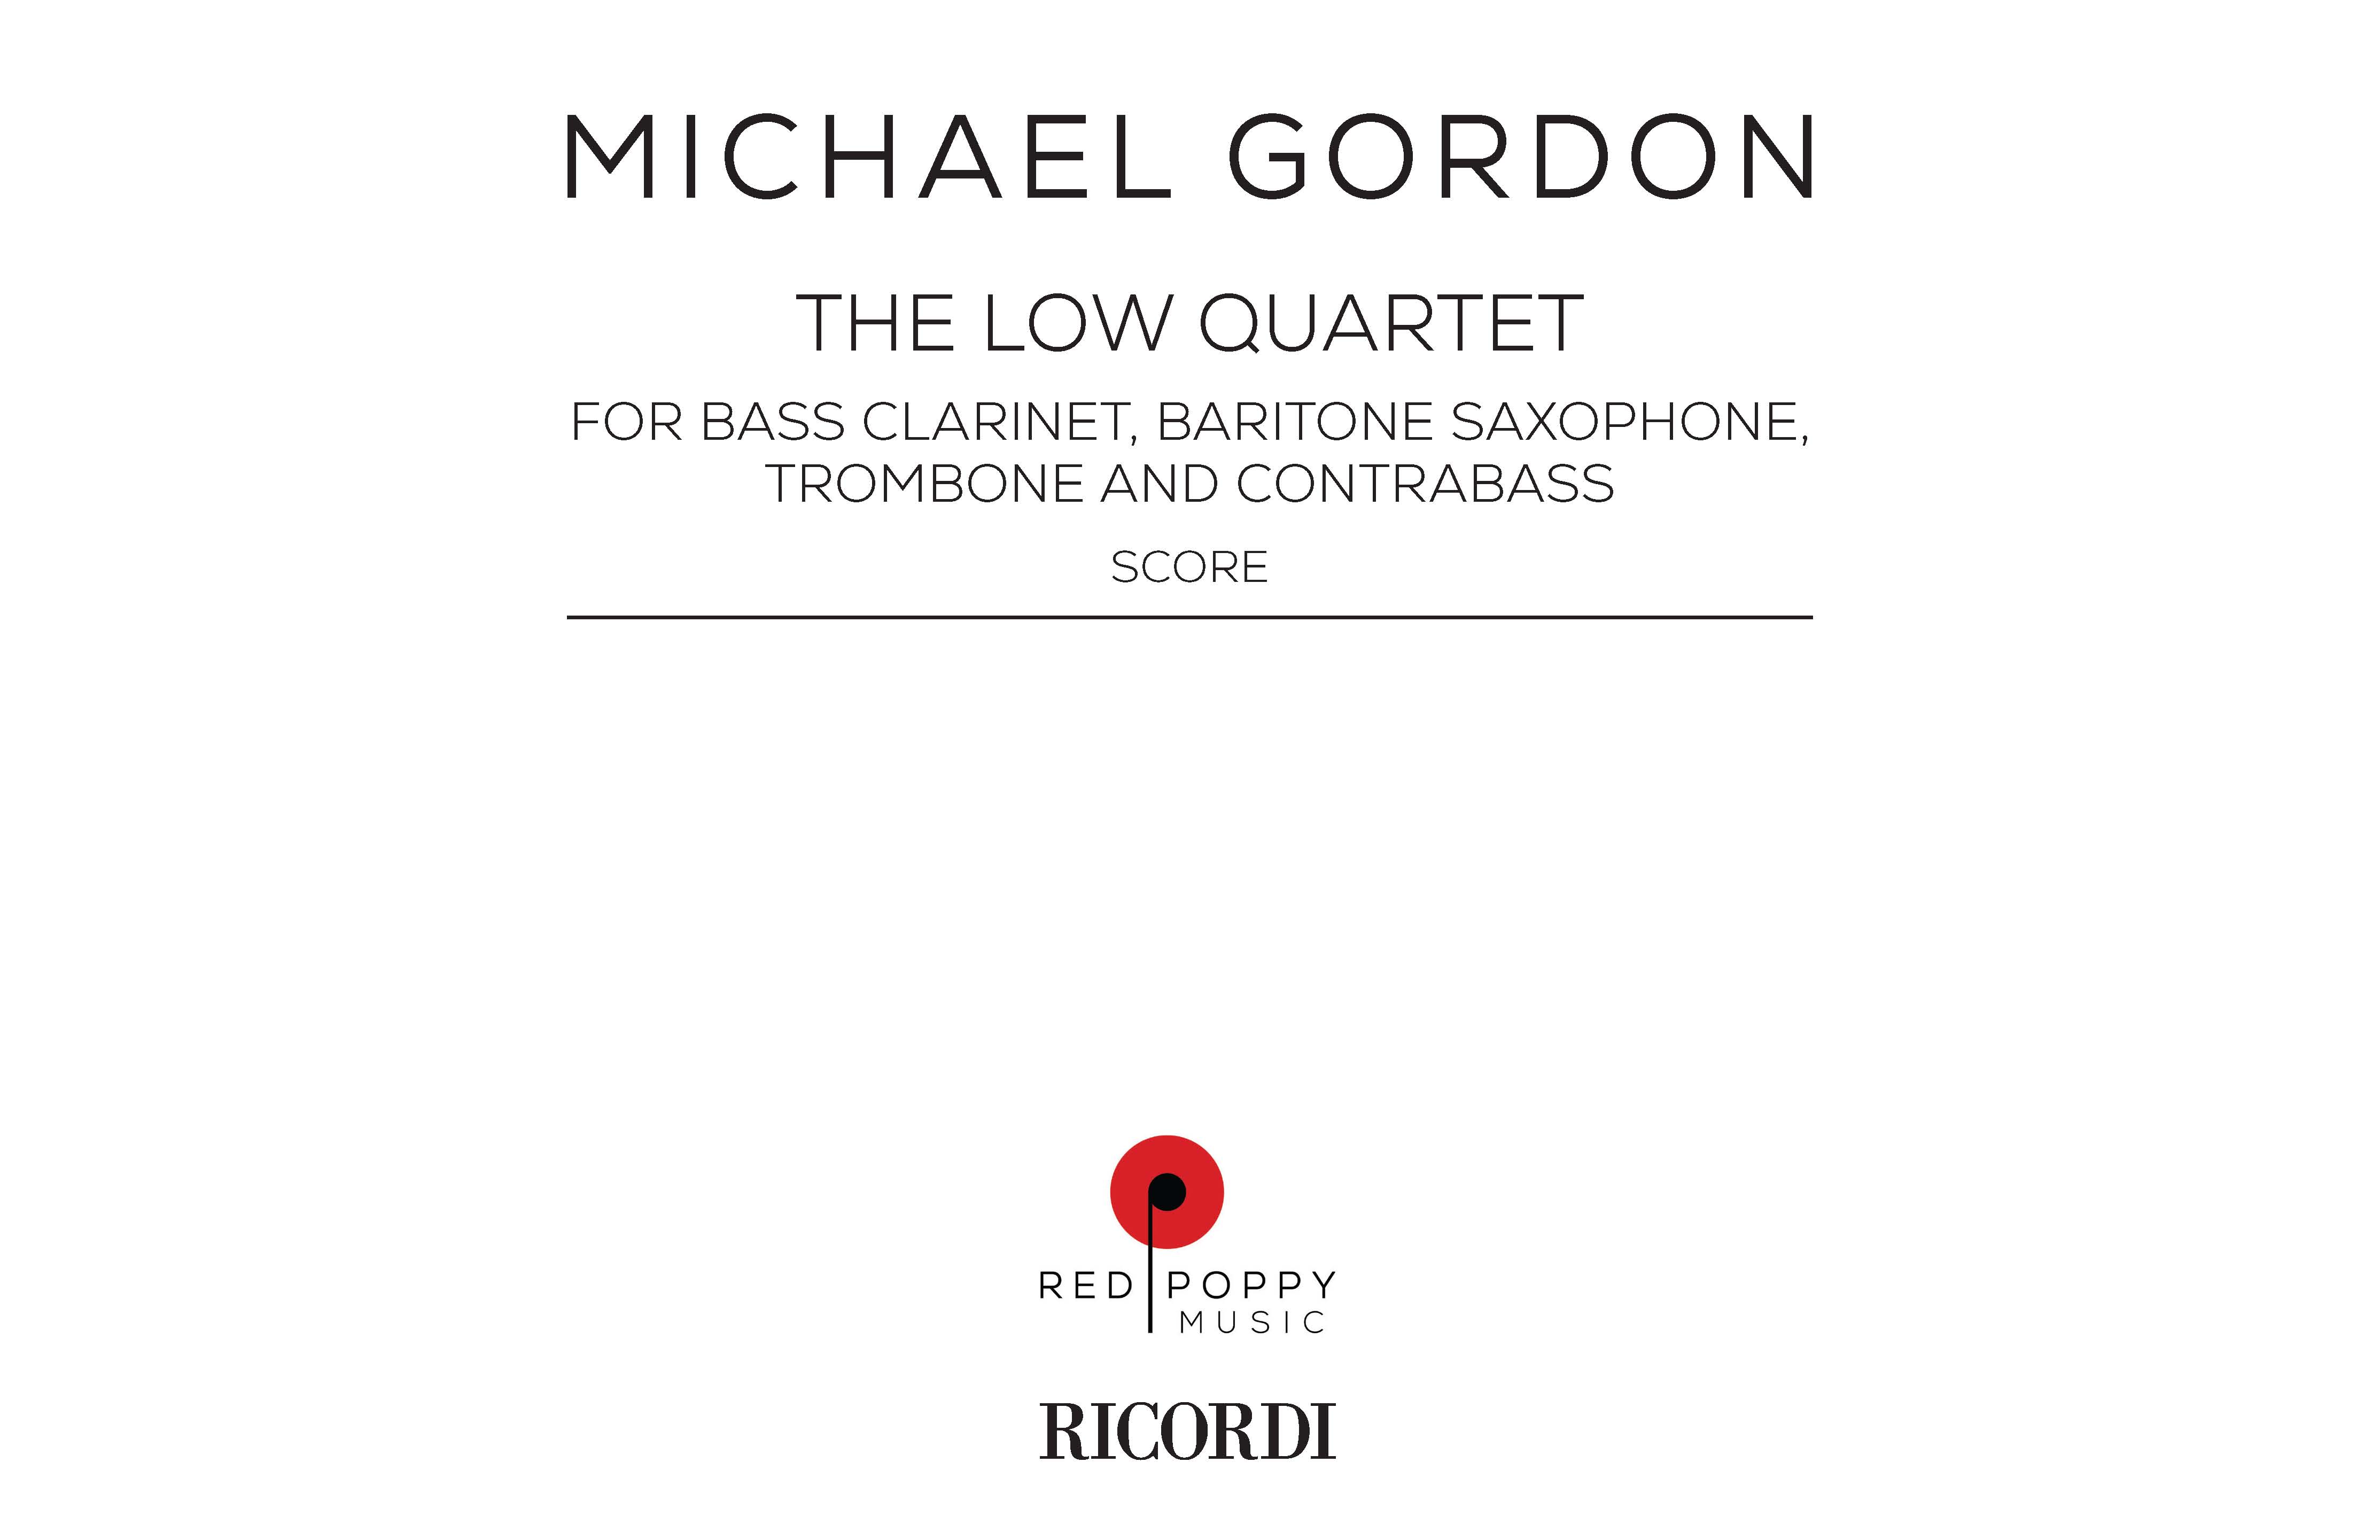 Low quartet, The for Bass Clarinet, Baritone Saxophone, Trombone & Contrabass